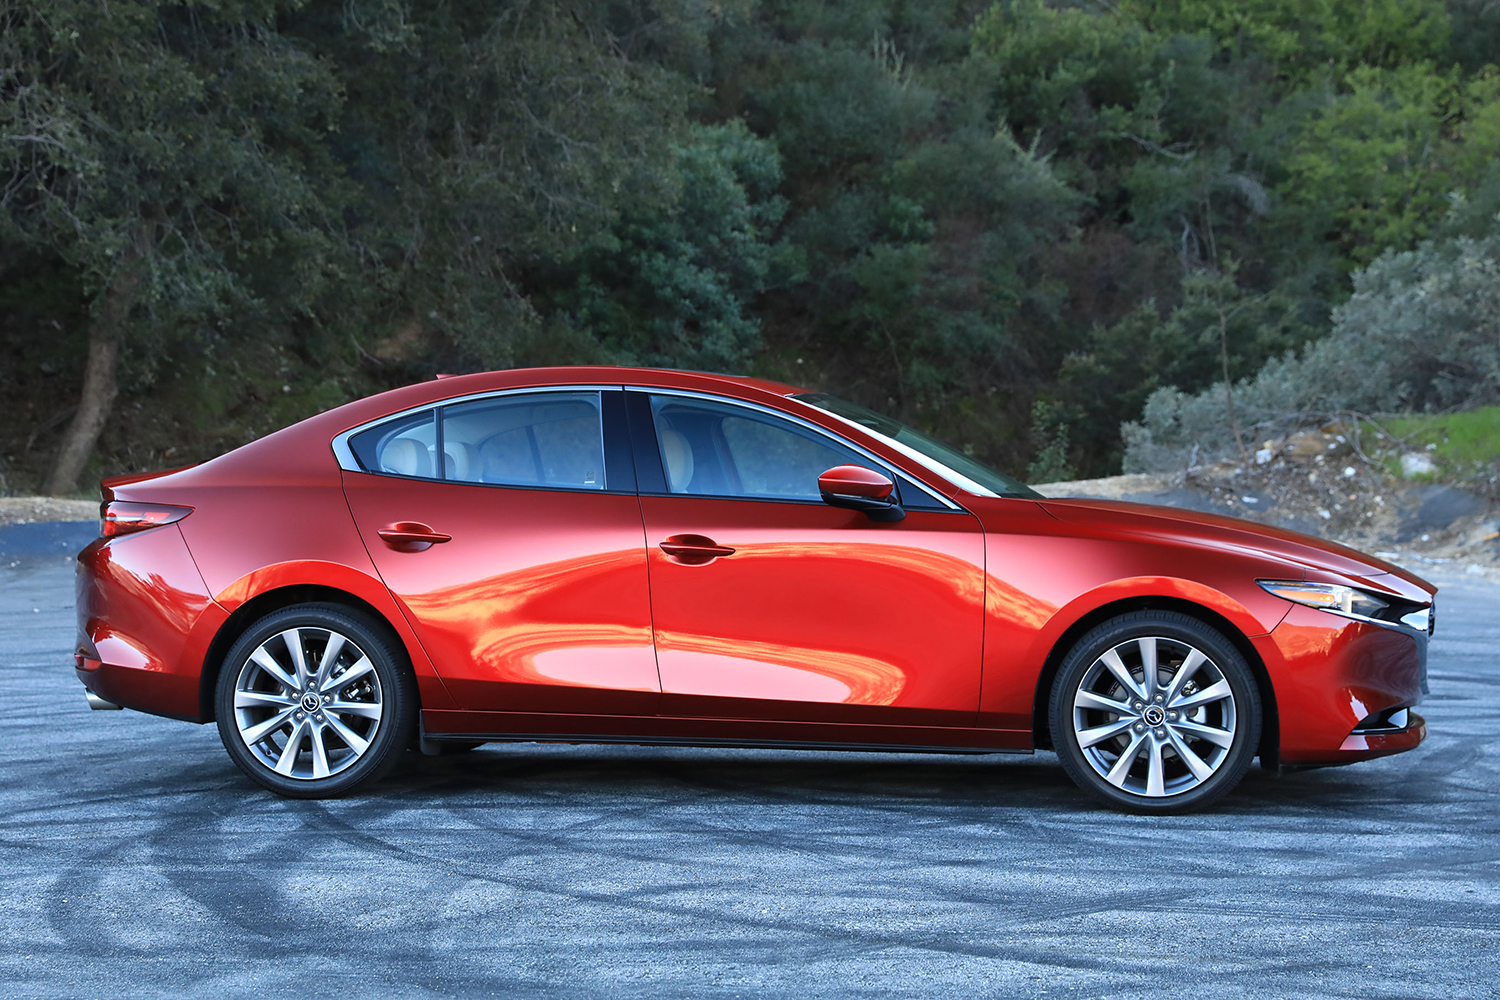 NEW 2023 Mazda 3 Sedan - Visual REVIEW interior, exterior 